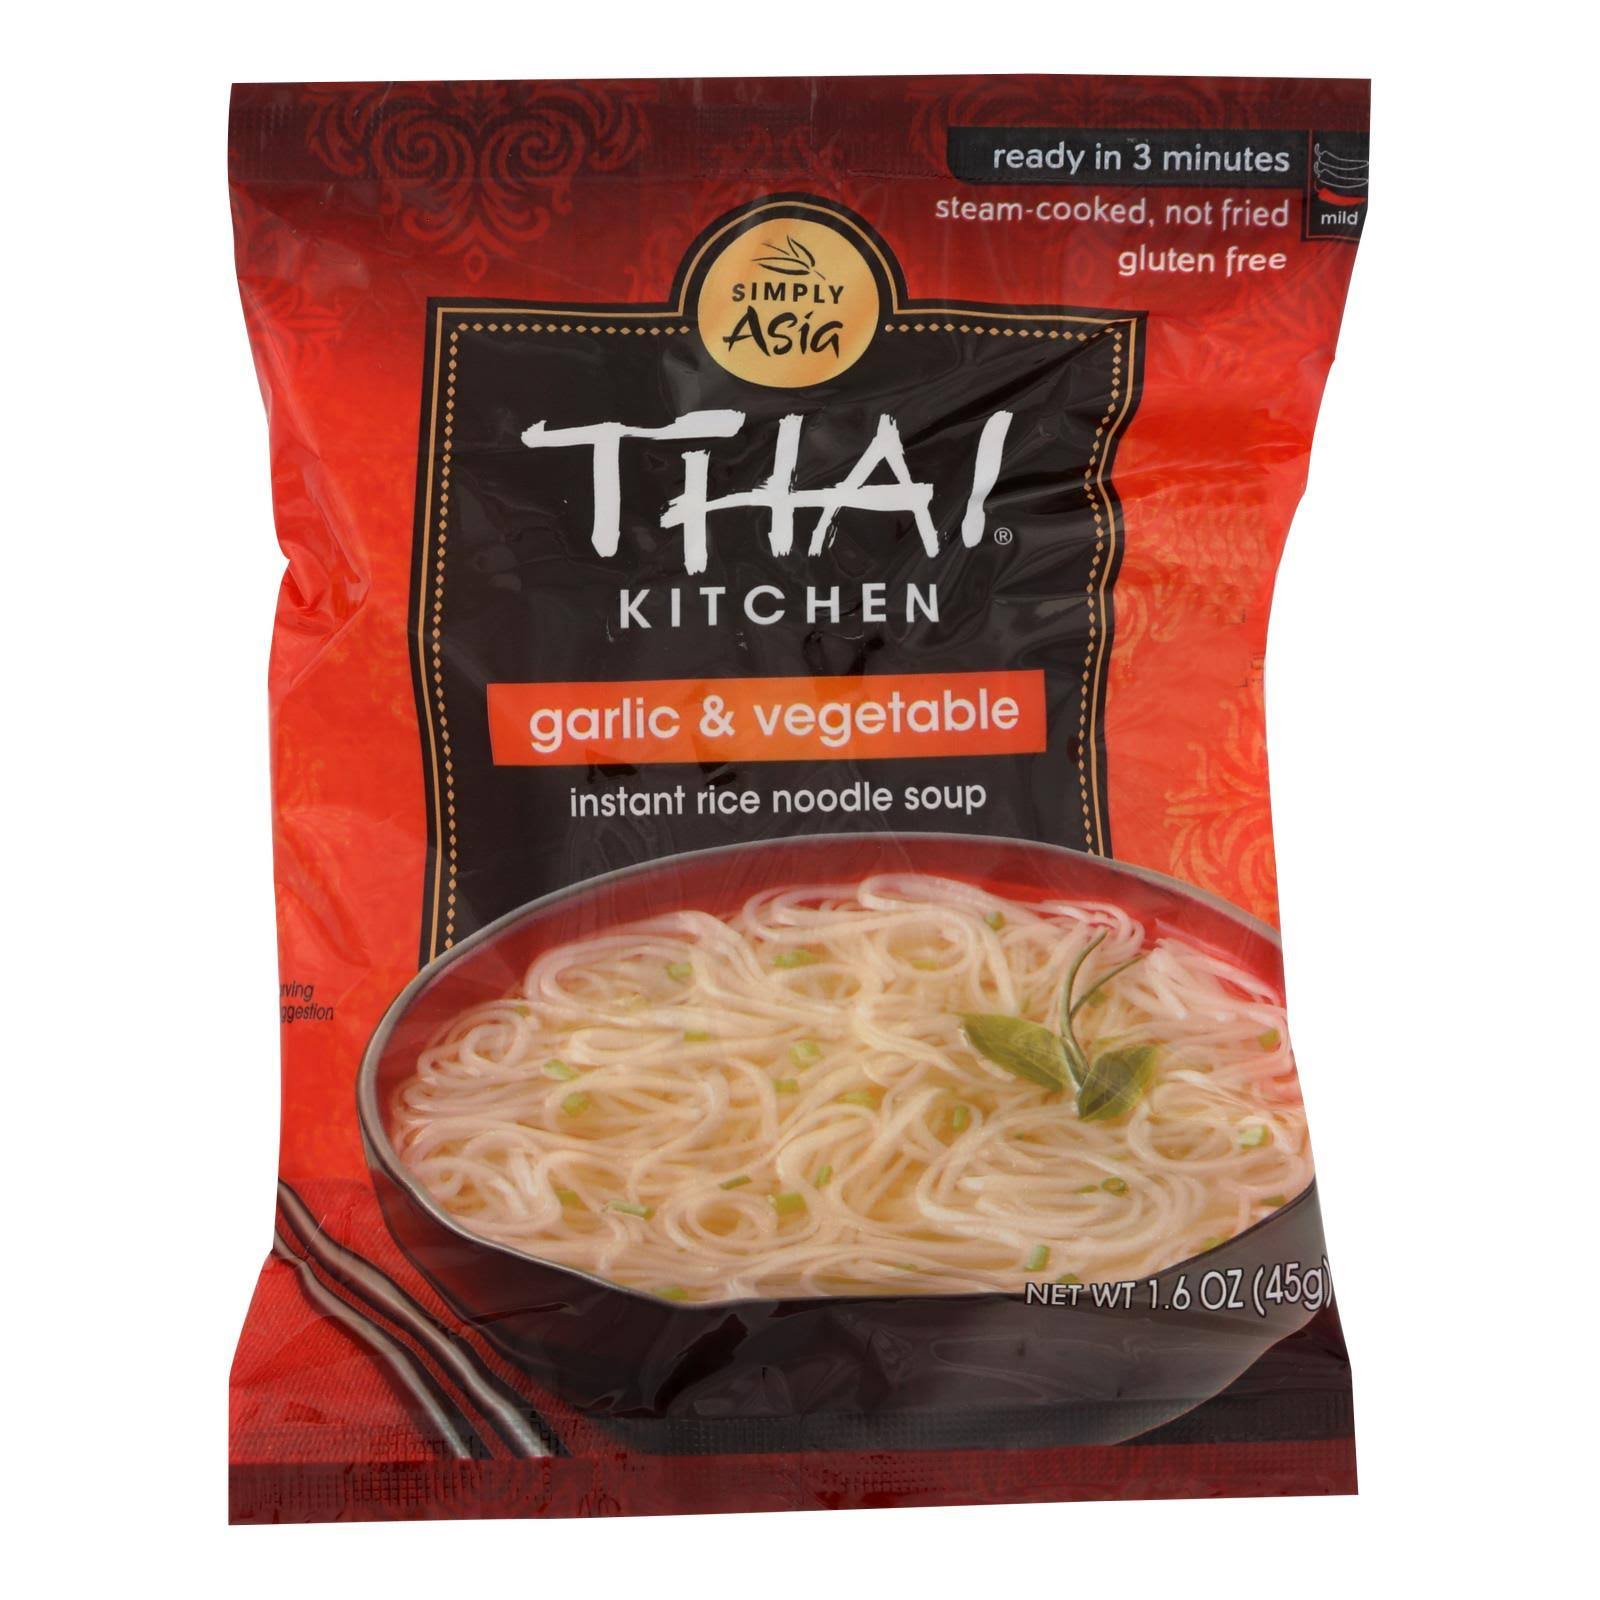 Thai Kitchen Instant Rice Noodle Soup - Garlic and Vegetables, 1.6oz